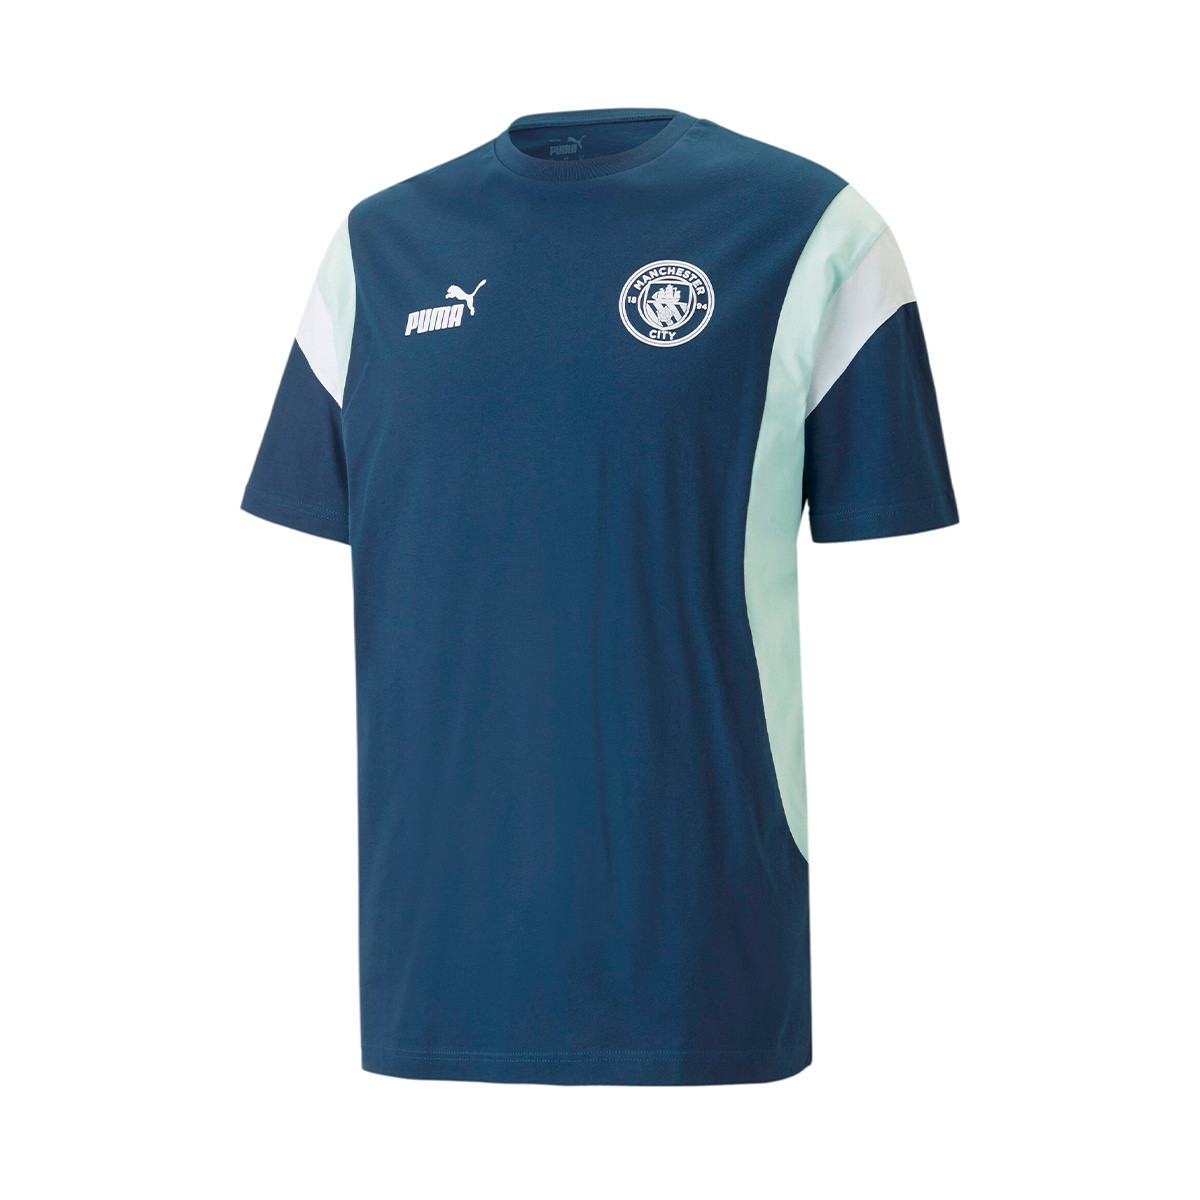 Puma Manchester City tréningové tričko tmavomodré pánske - SKLADOM